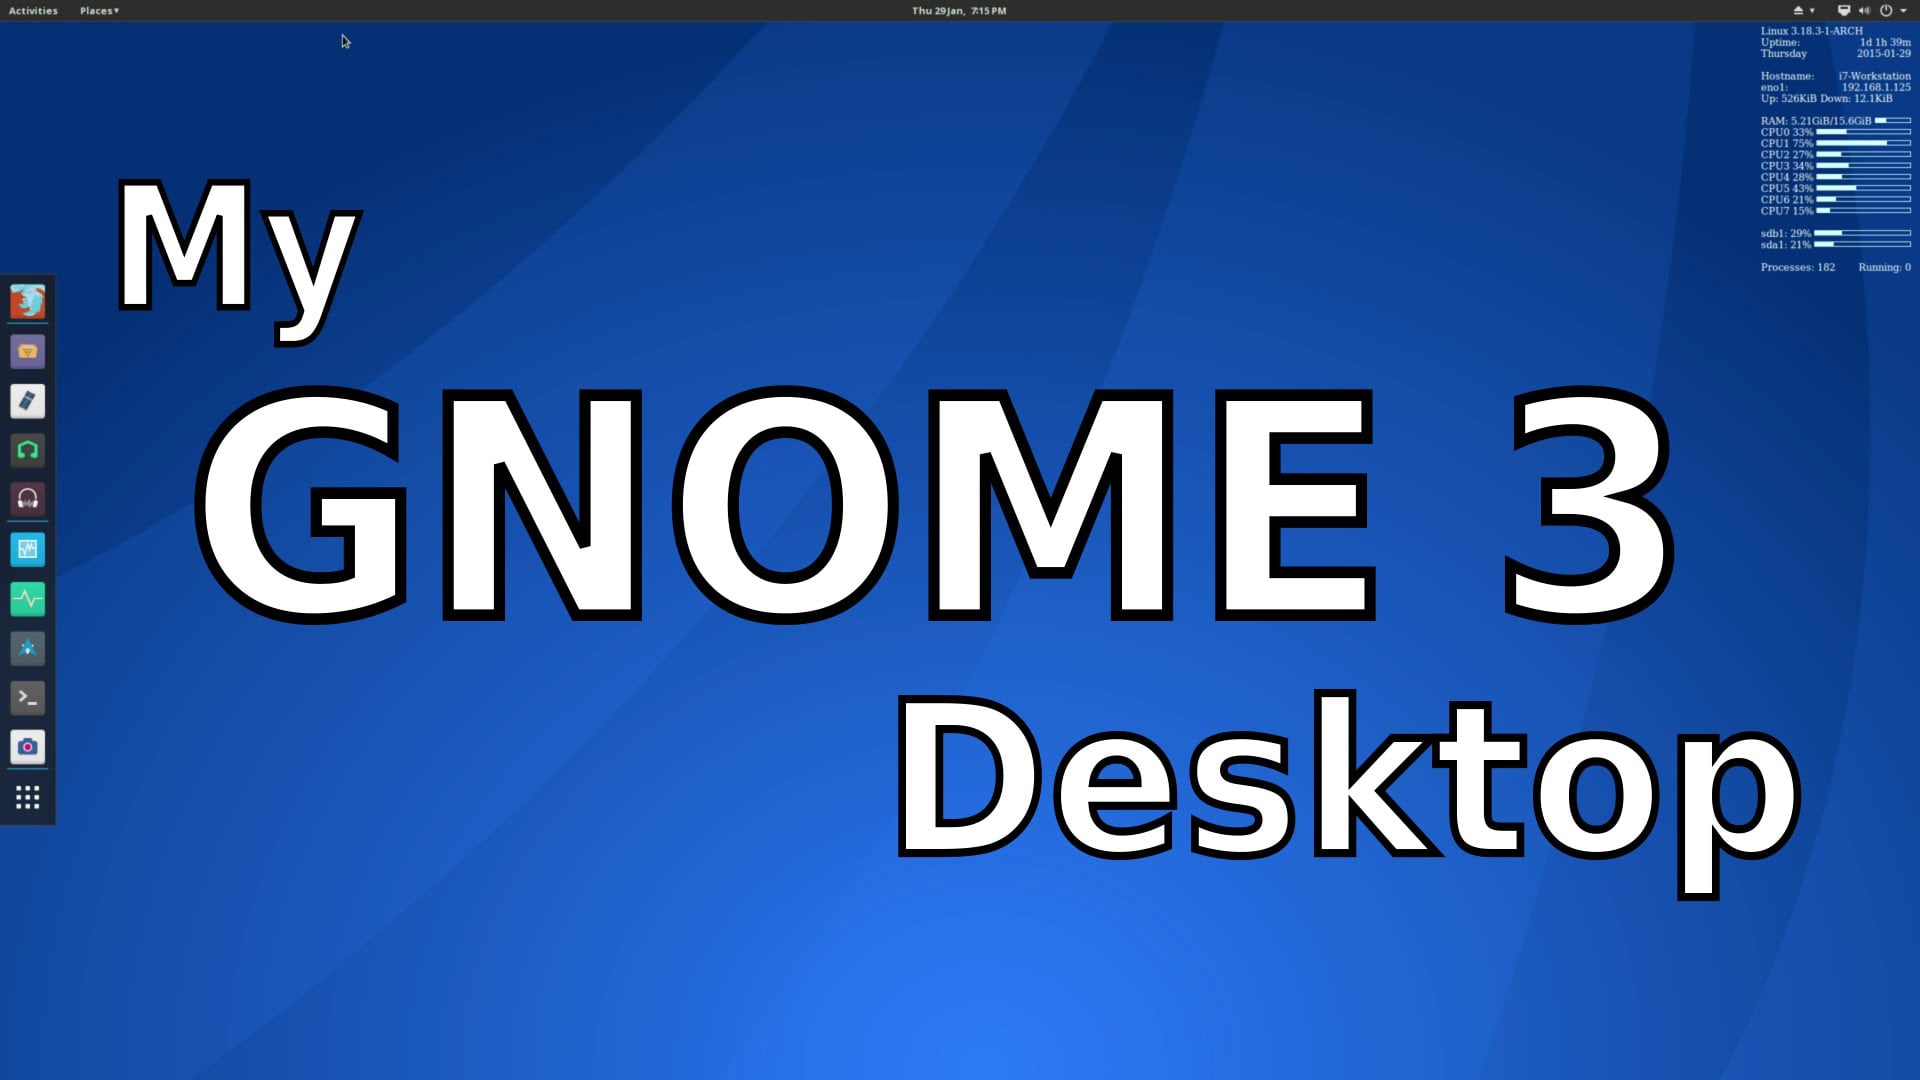 My GNOME 3 Desktop